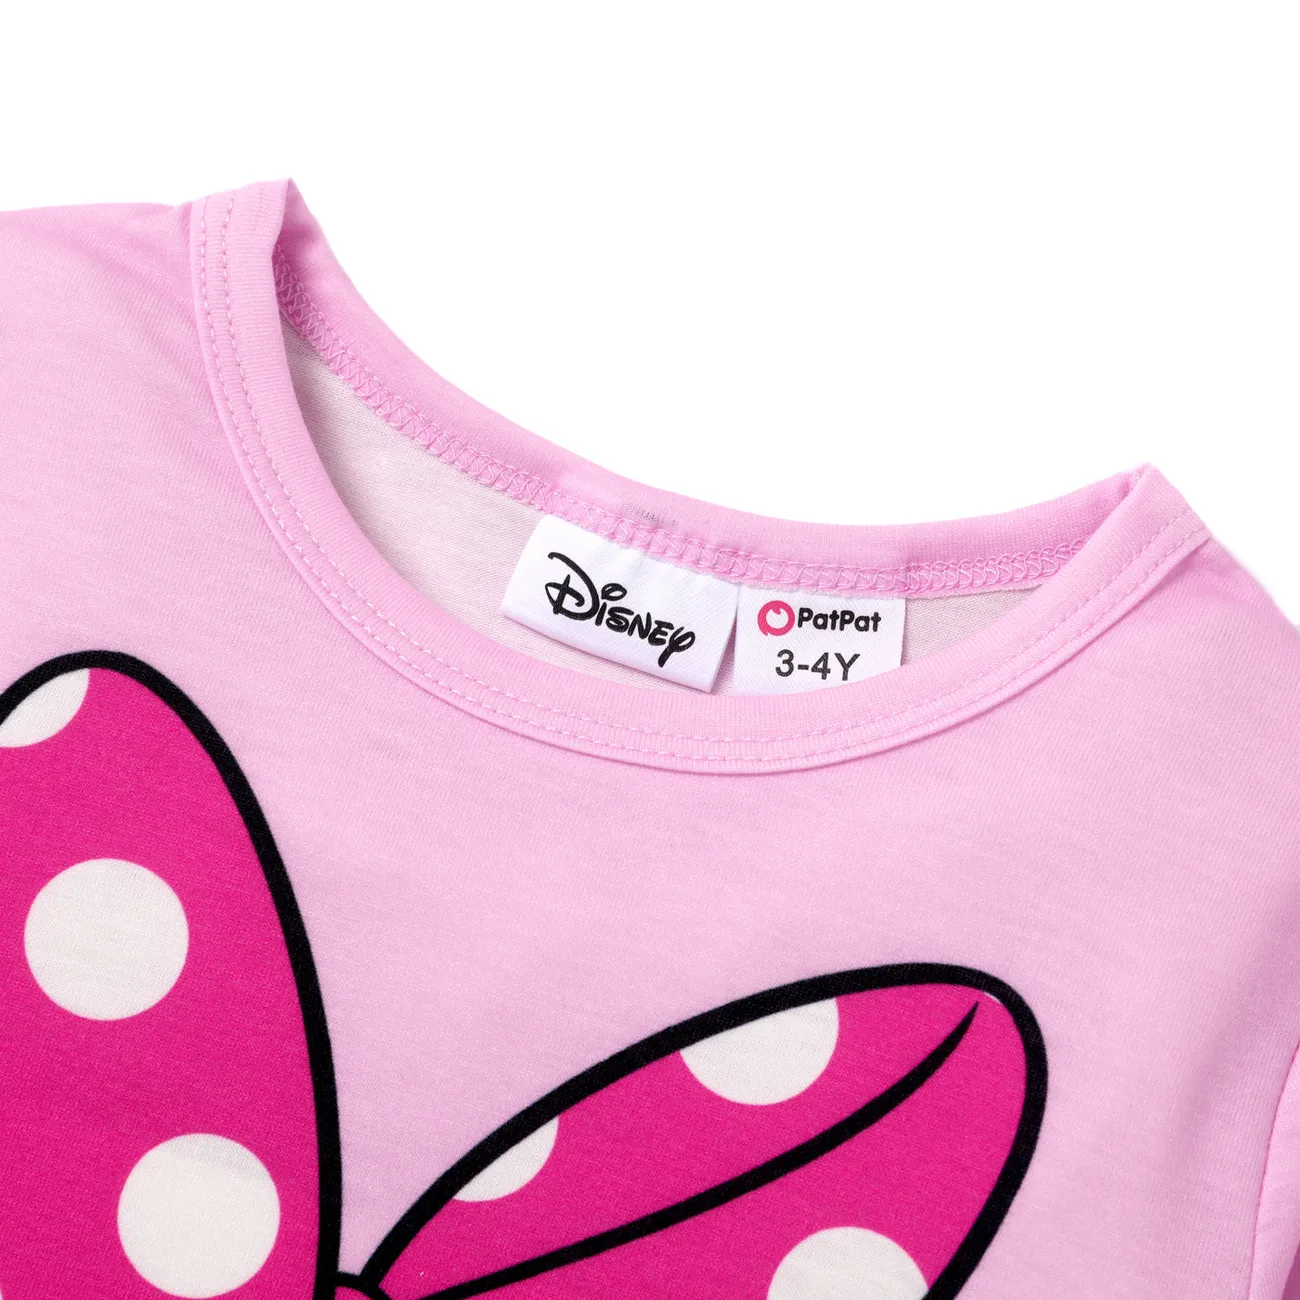 Disney Mickey and Friends Unisexe Enfantin T-Shirt Rose big image 1